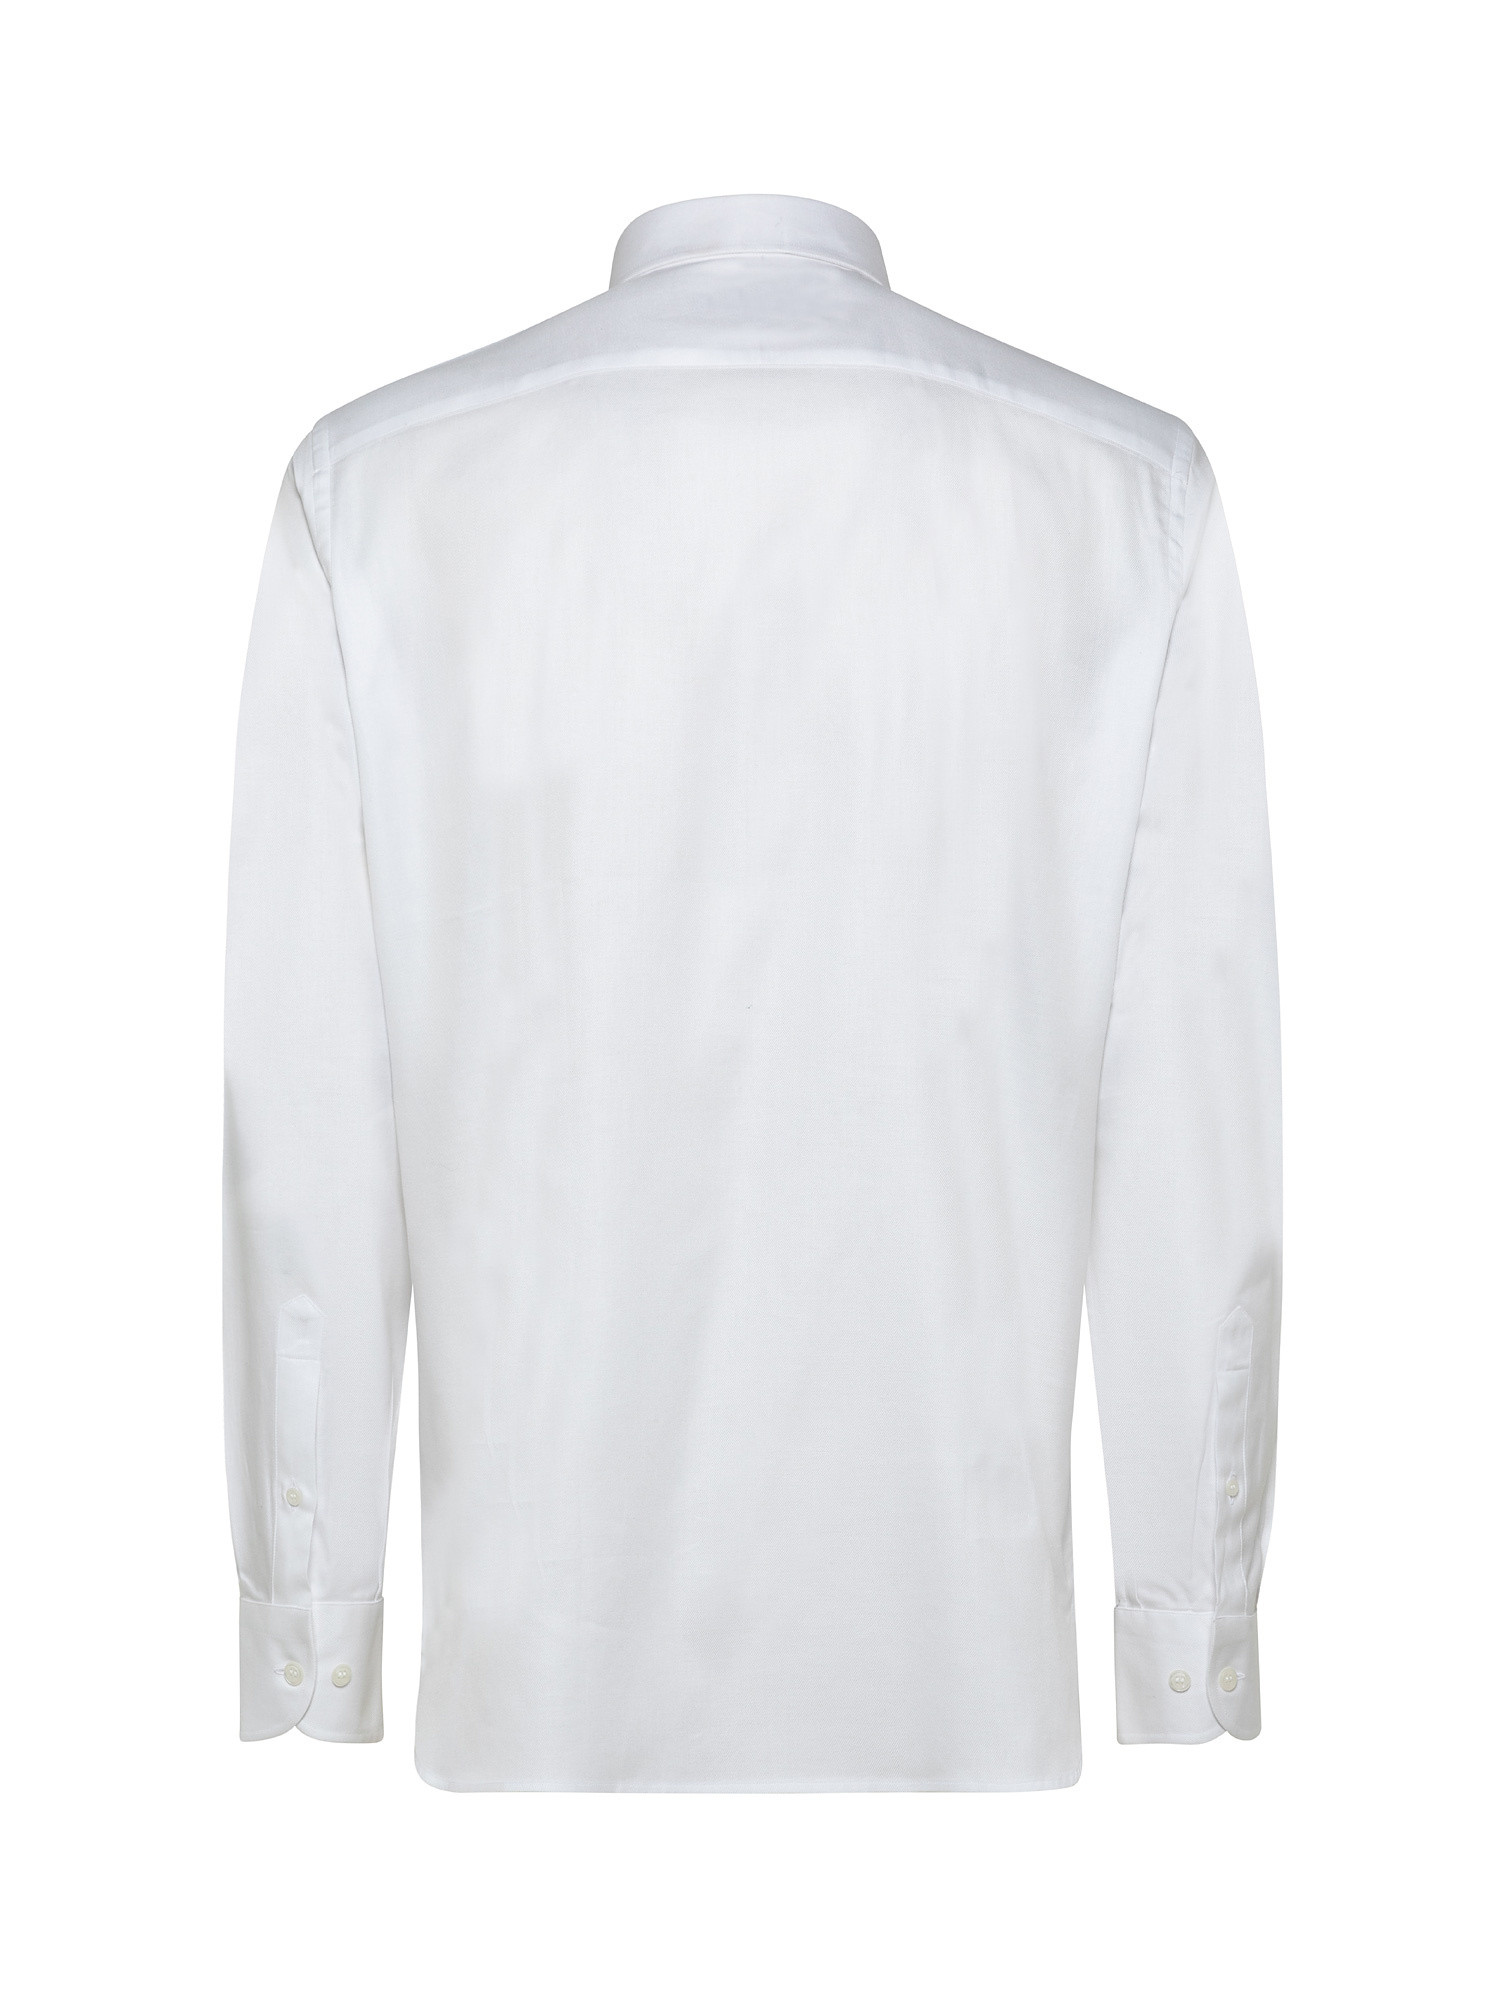 Camicia slim fit in twill di cotone, Bianco, large image number 1